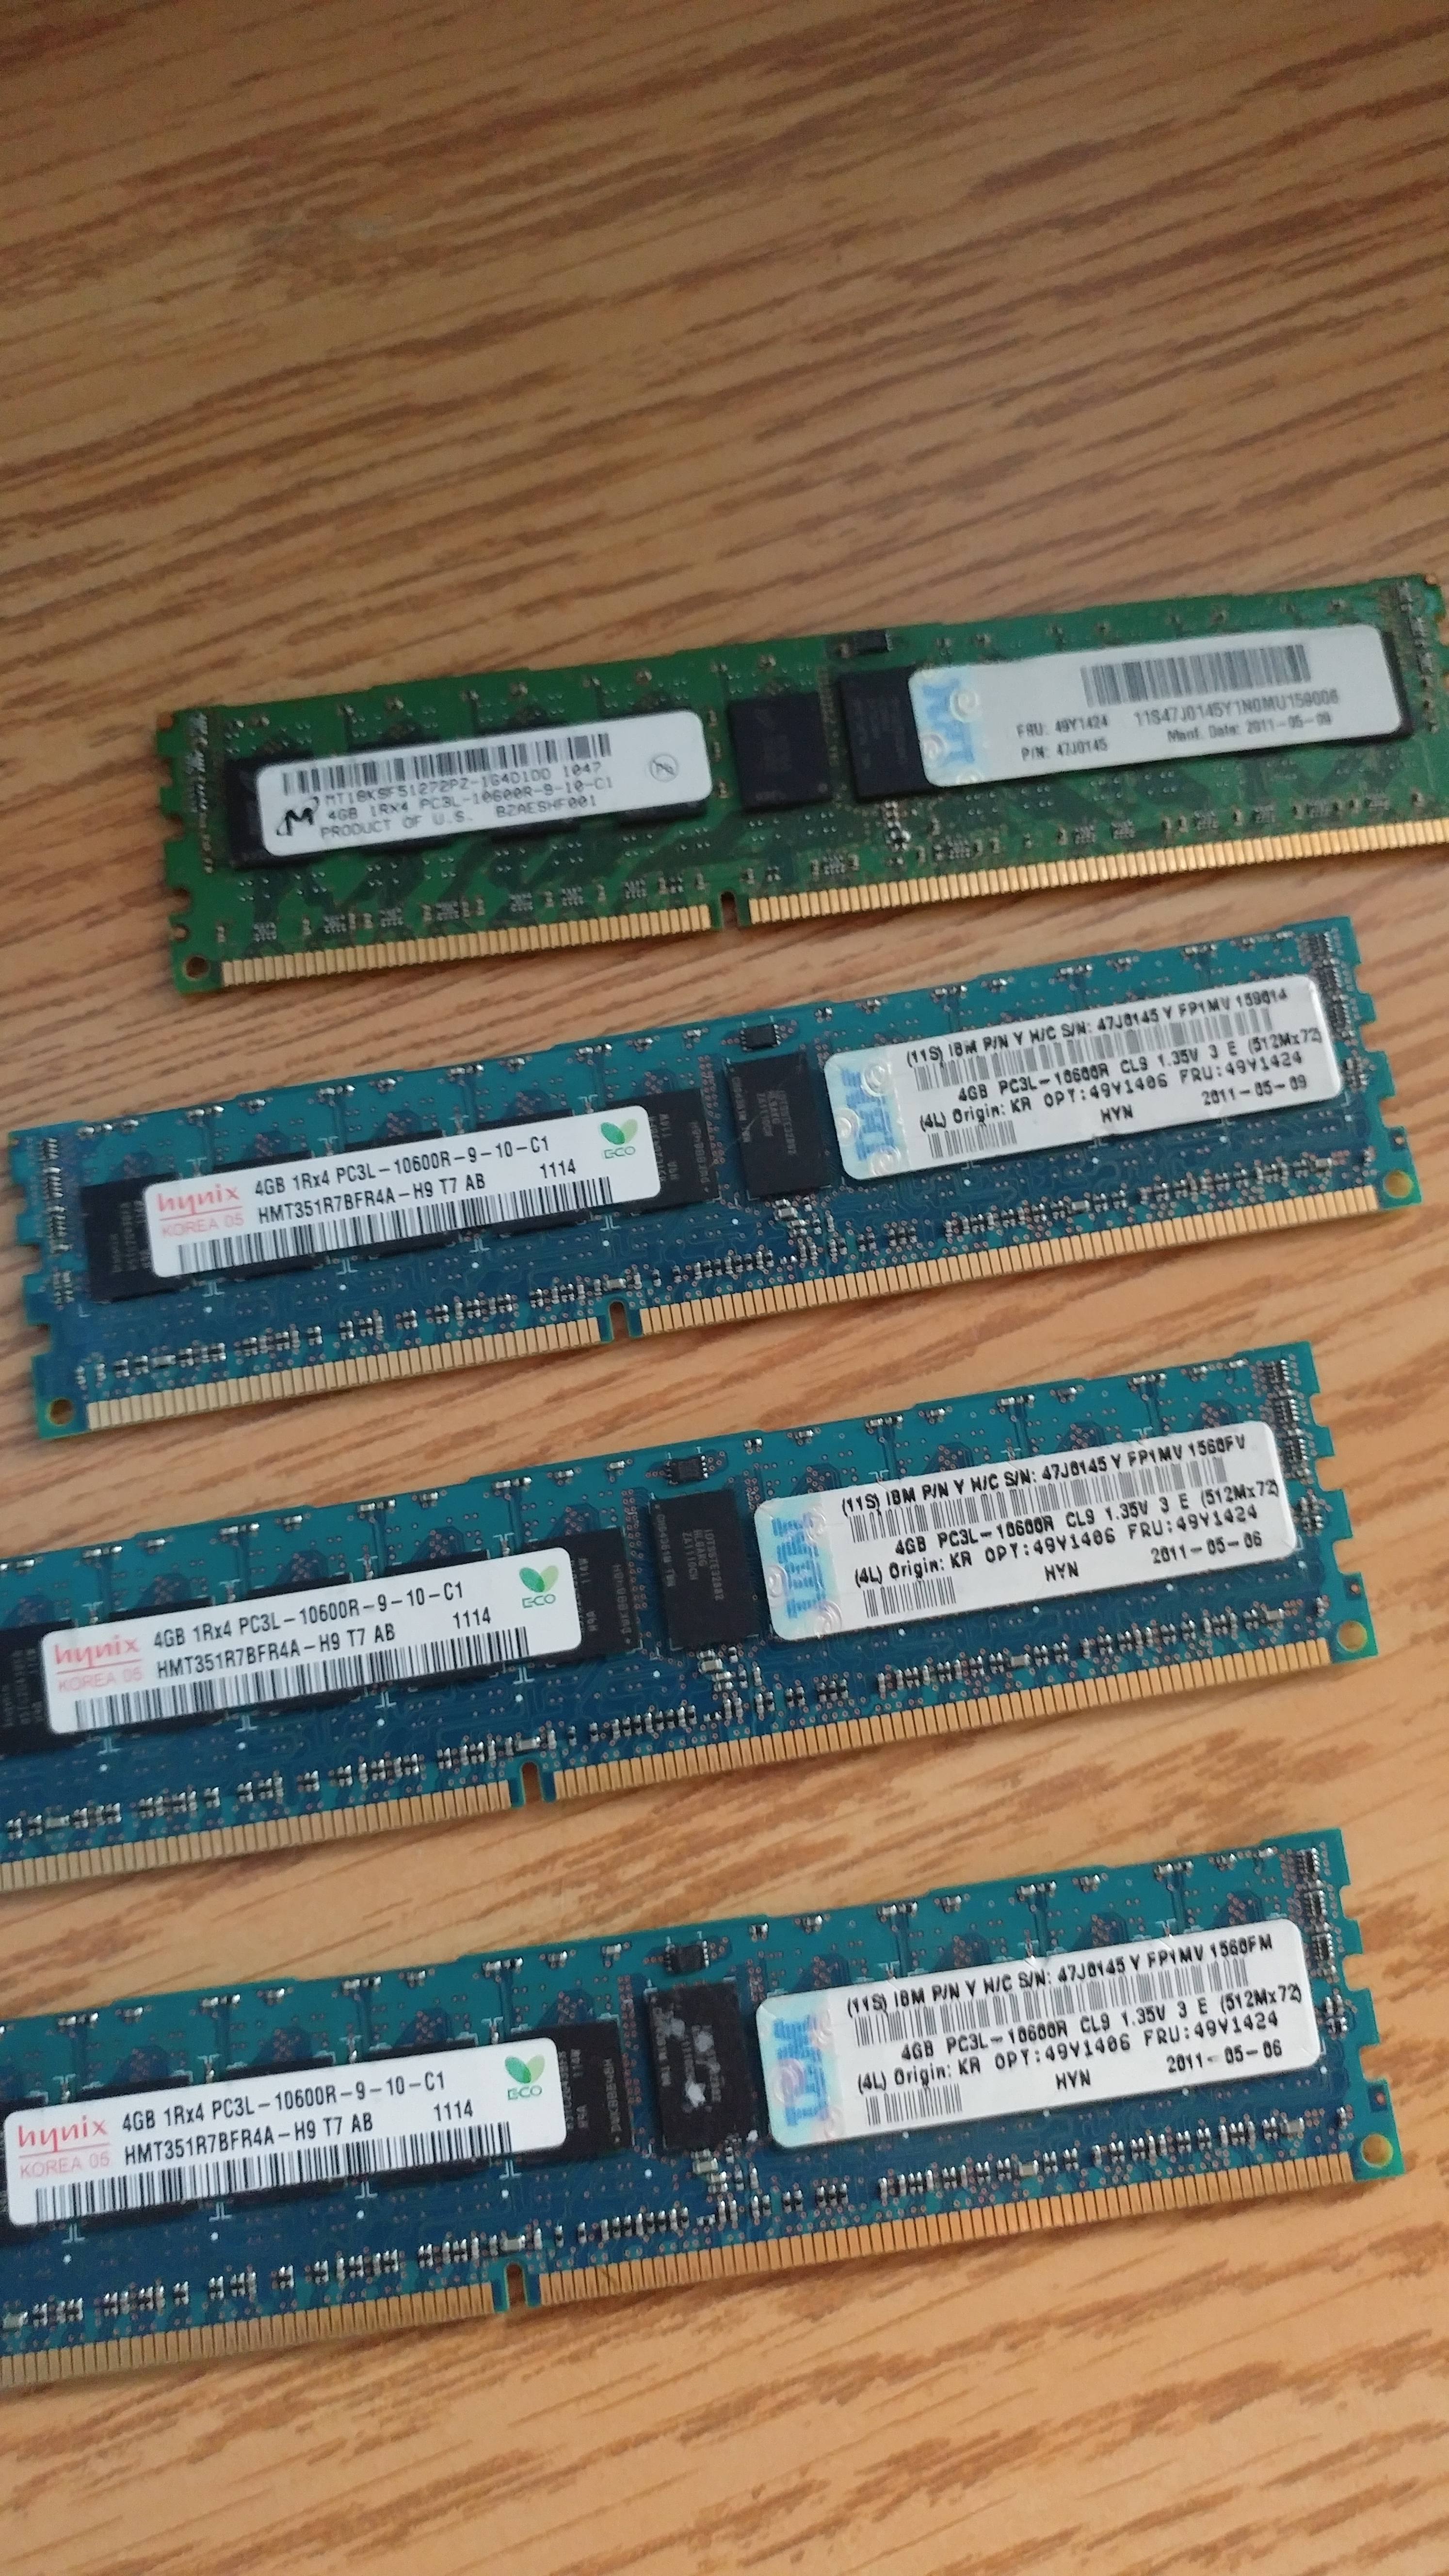 Broken RAM? - CPUs, and Memory - Linus Tech Tips